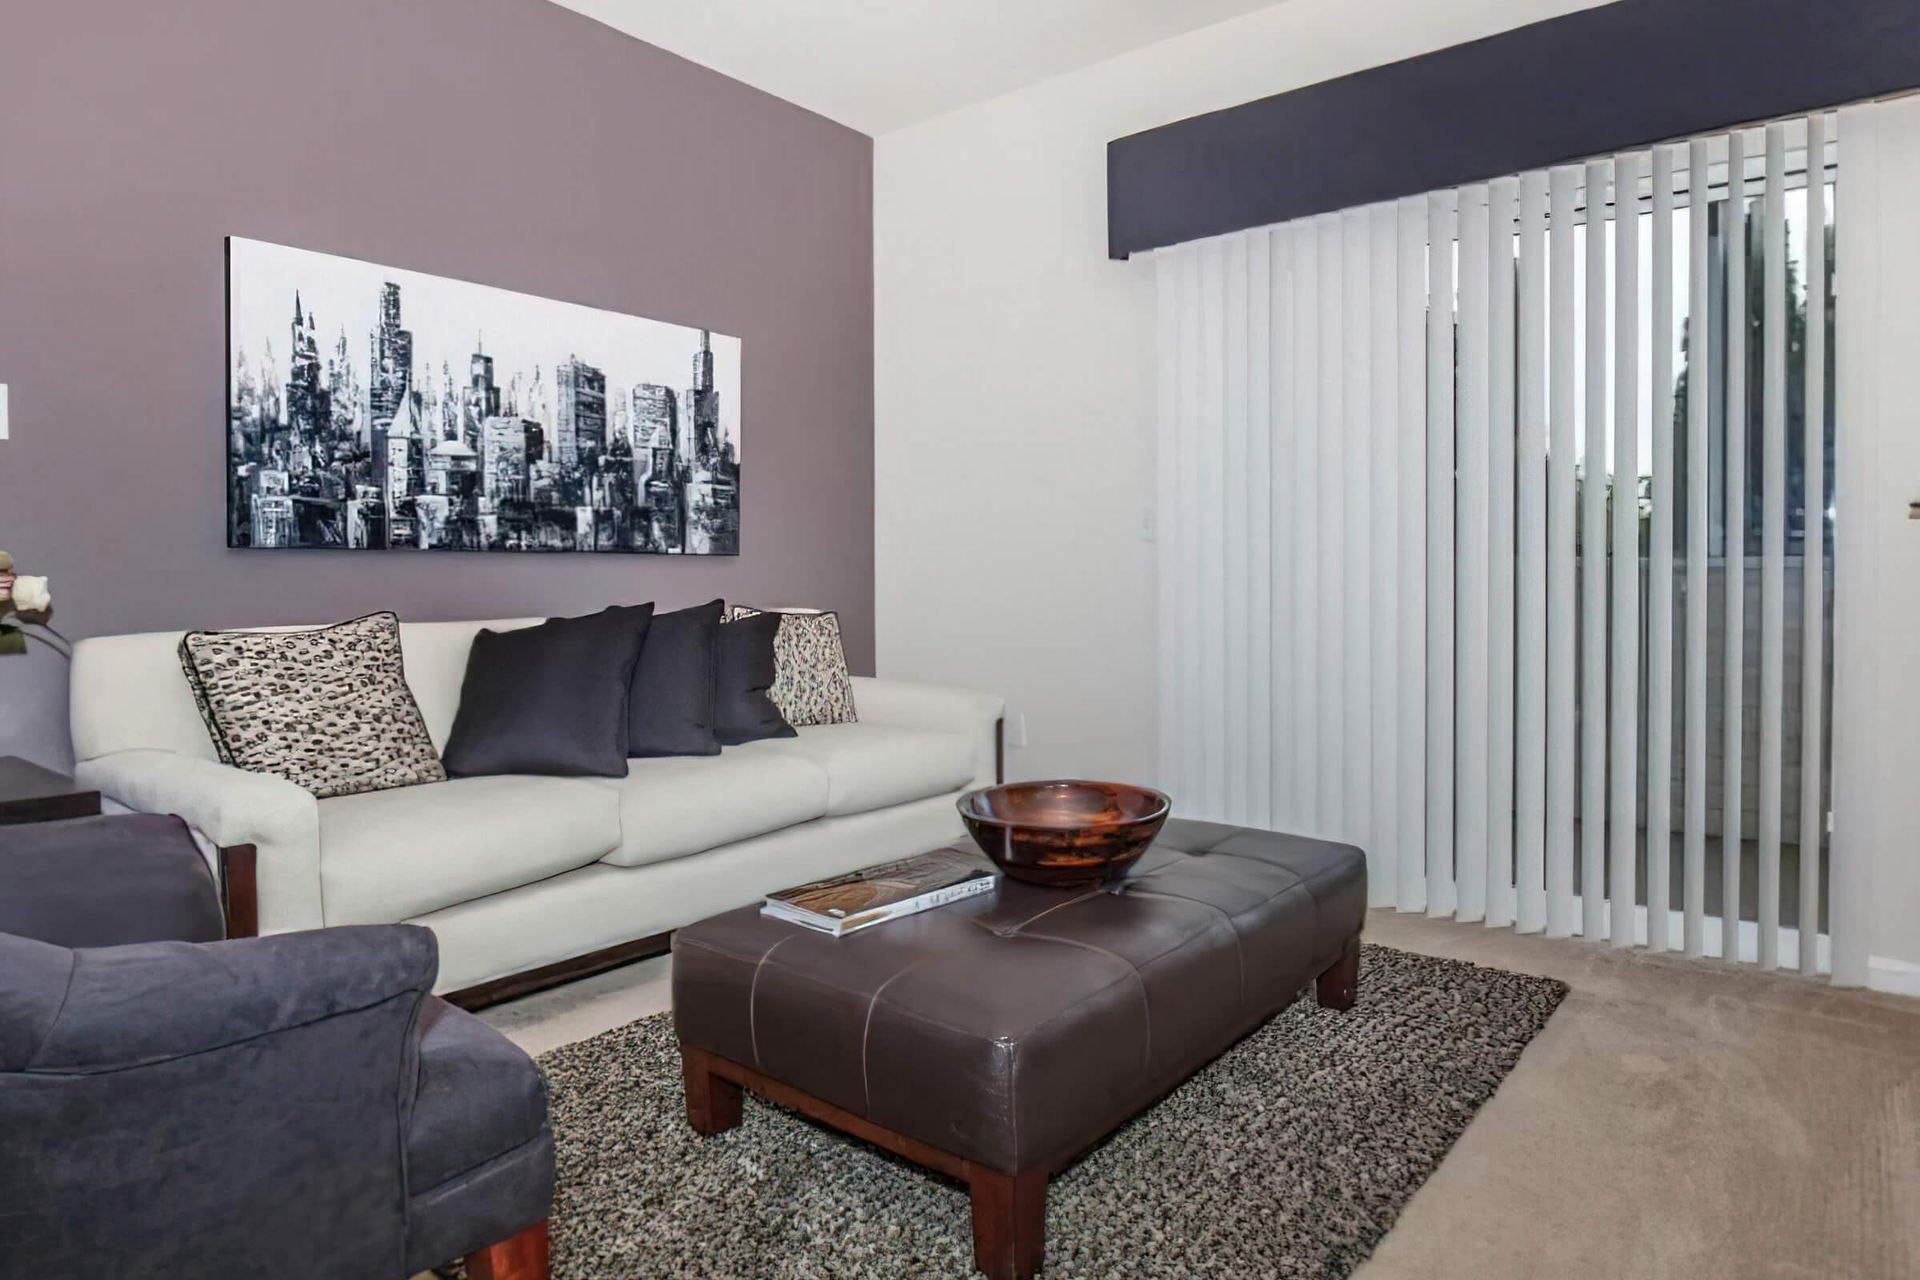 The 85Twenty apartment living room with luxury interior like modern sofa, coffee table, wall art, and spacious balcony window.